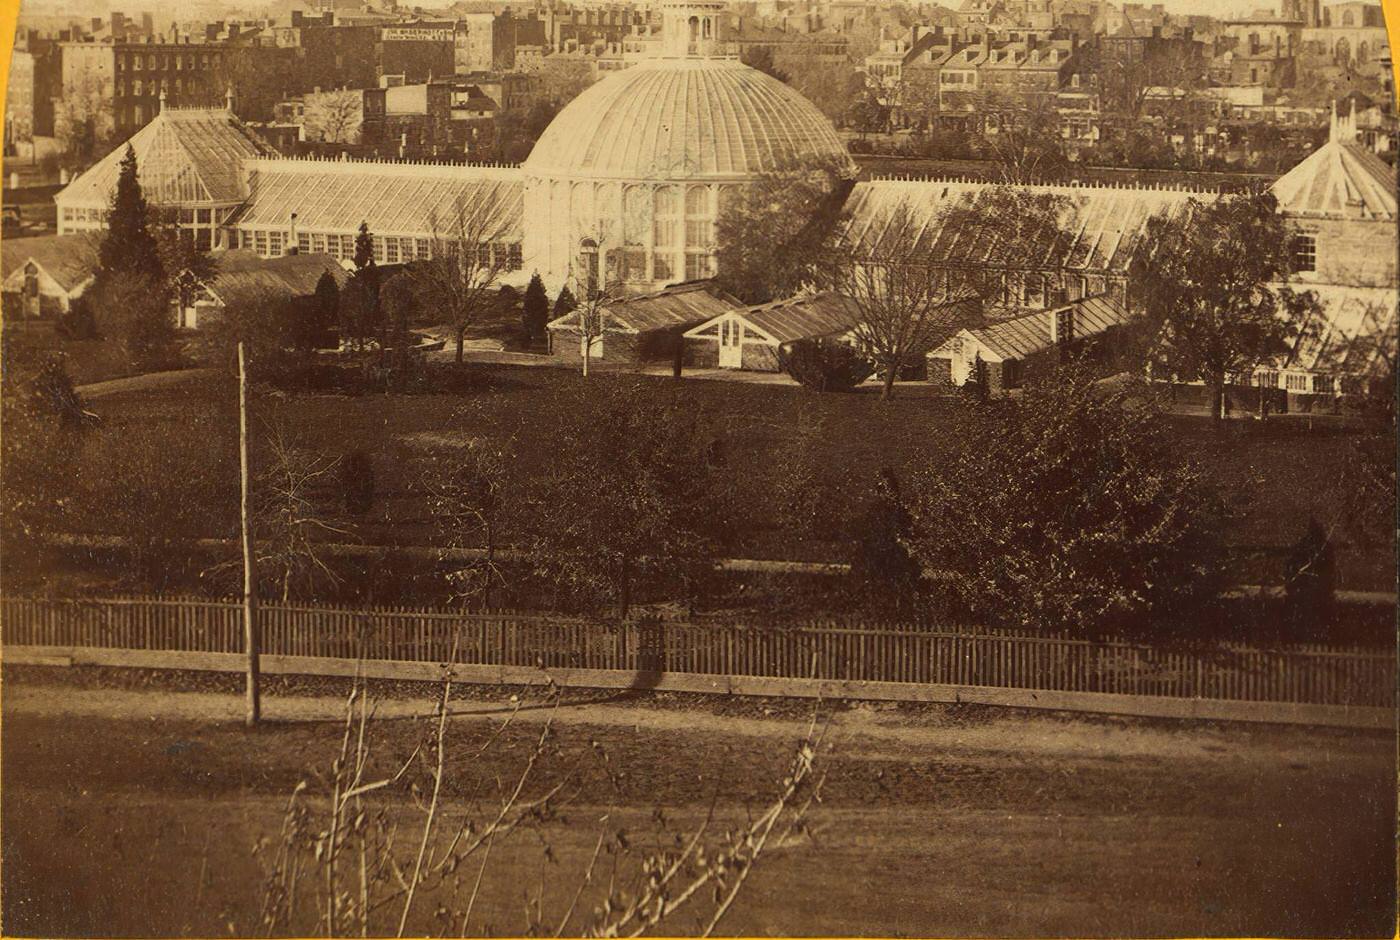 U.S. Conservatory - Botanical Garden., Bell & Bro, Washington, D.C., 1860s